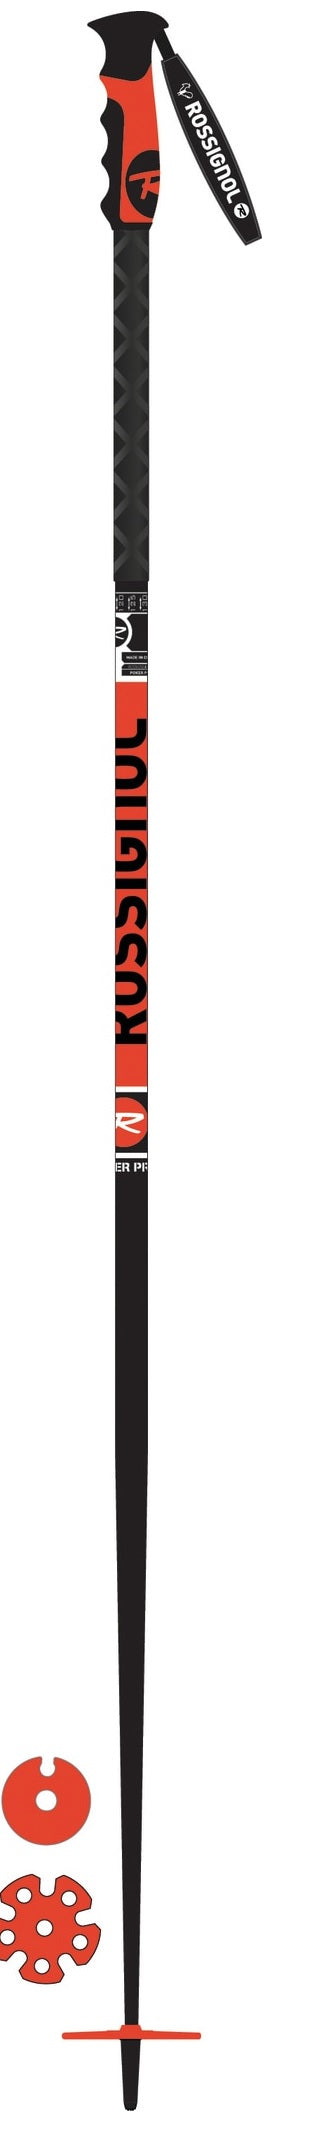 Rossignol Poker Pro ski poles - ProSkiGuy your Hometown Ski Shop on the web